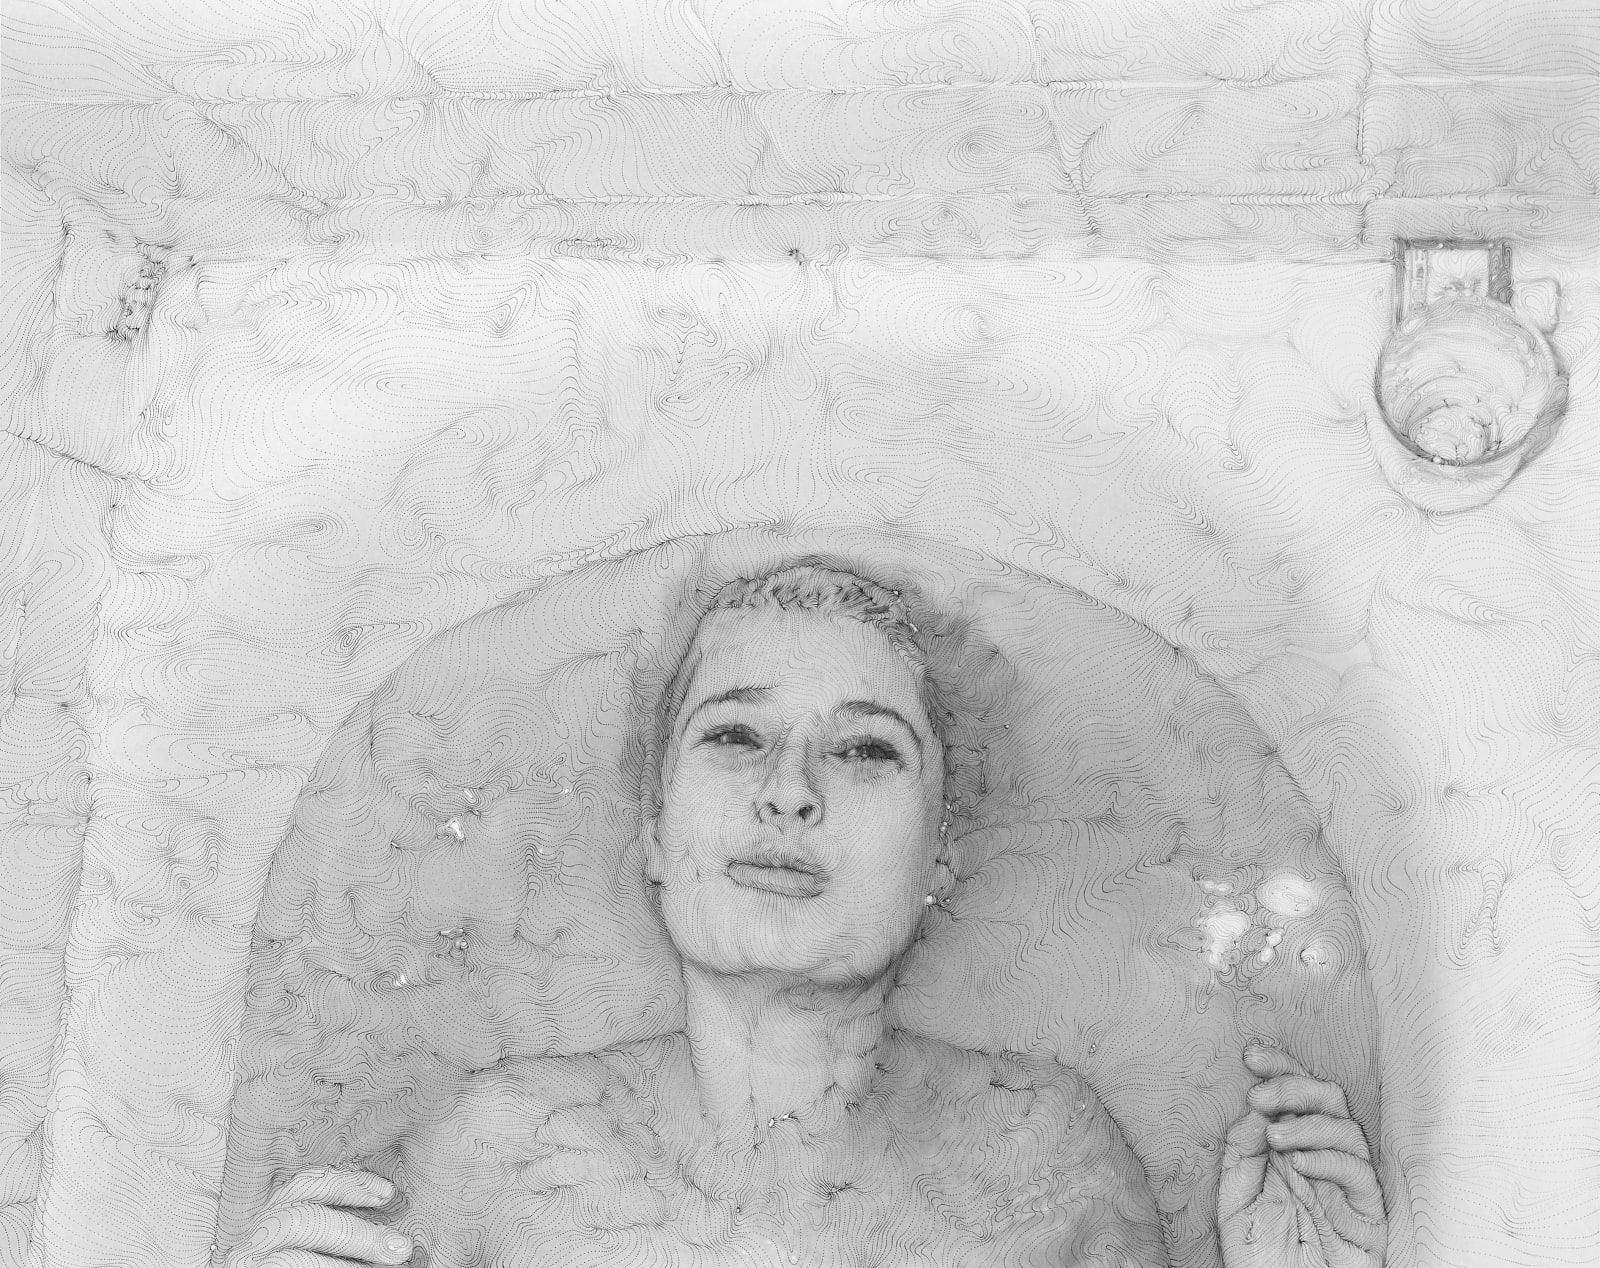 Sebastiaan Bremer Ave Maria 2 woman face and shoulders in bathtub gray dot image